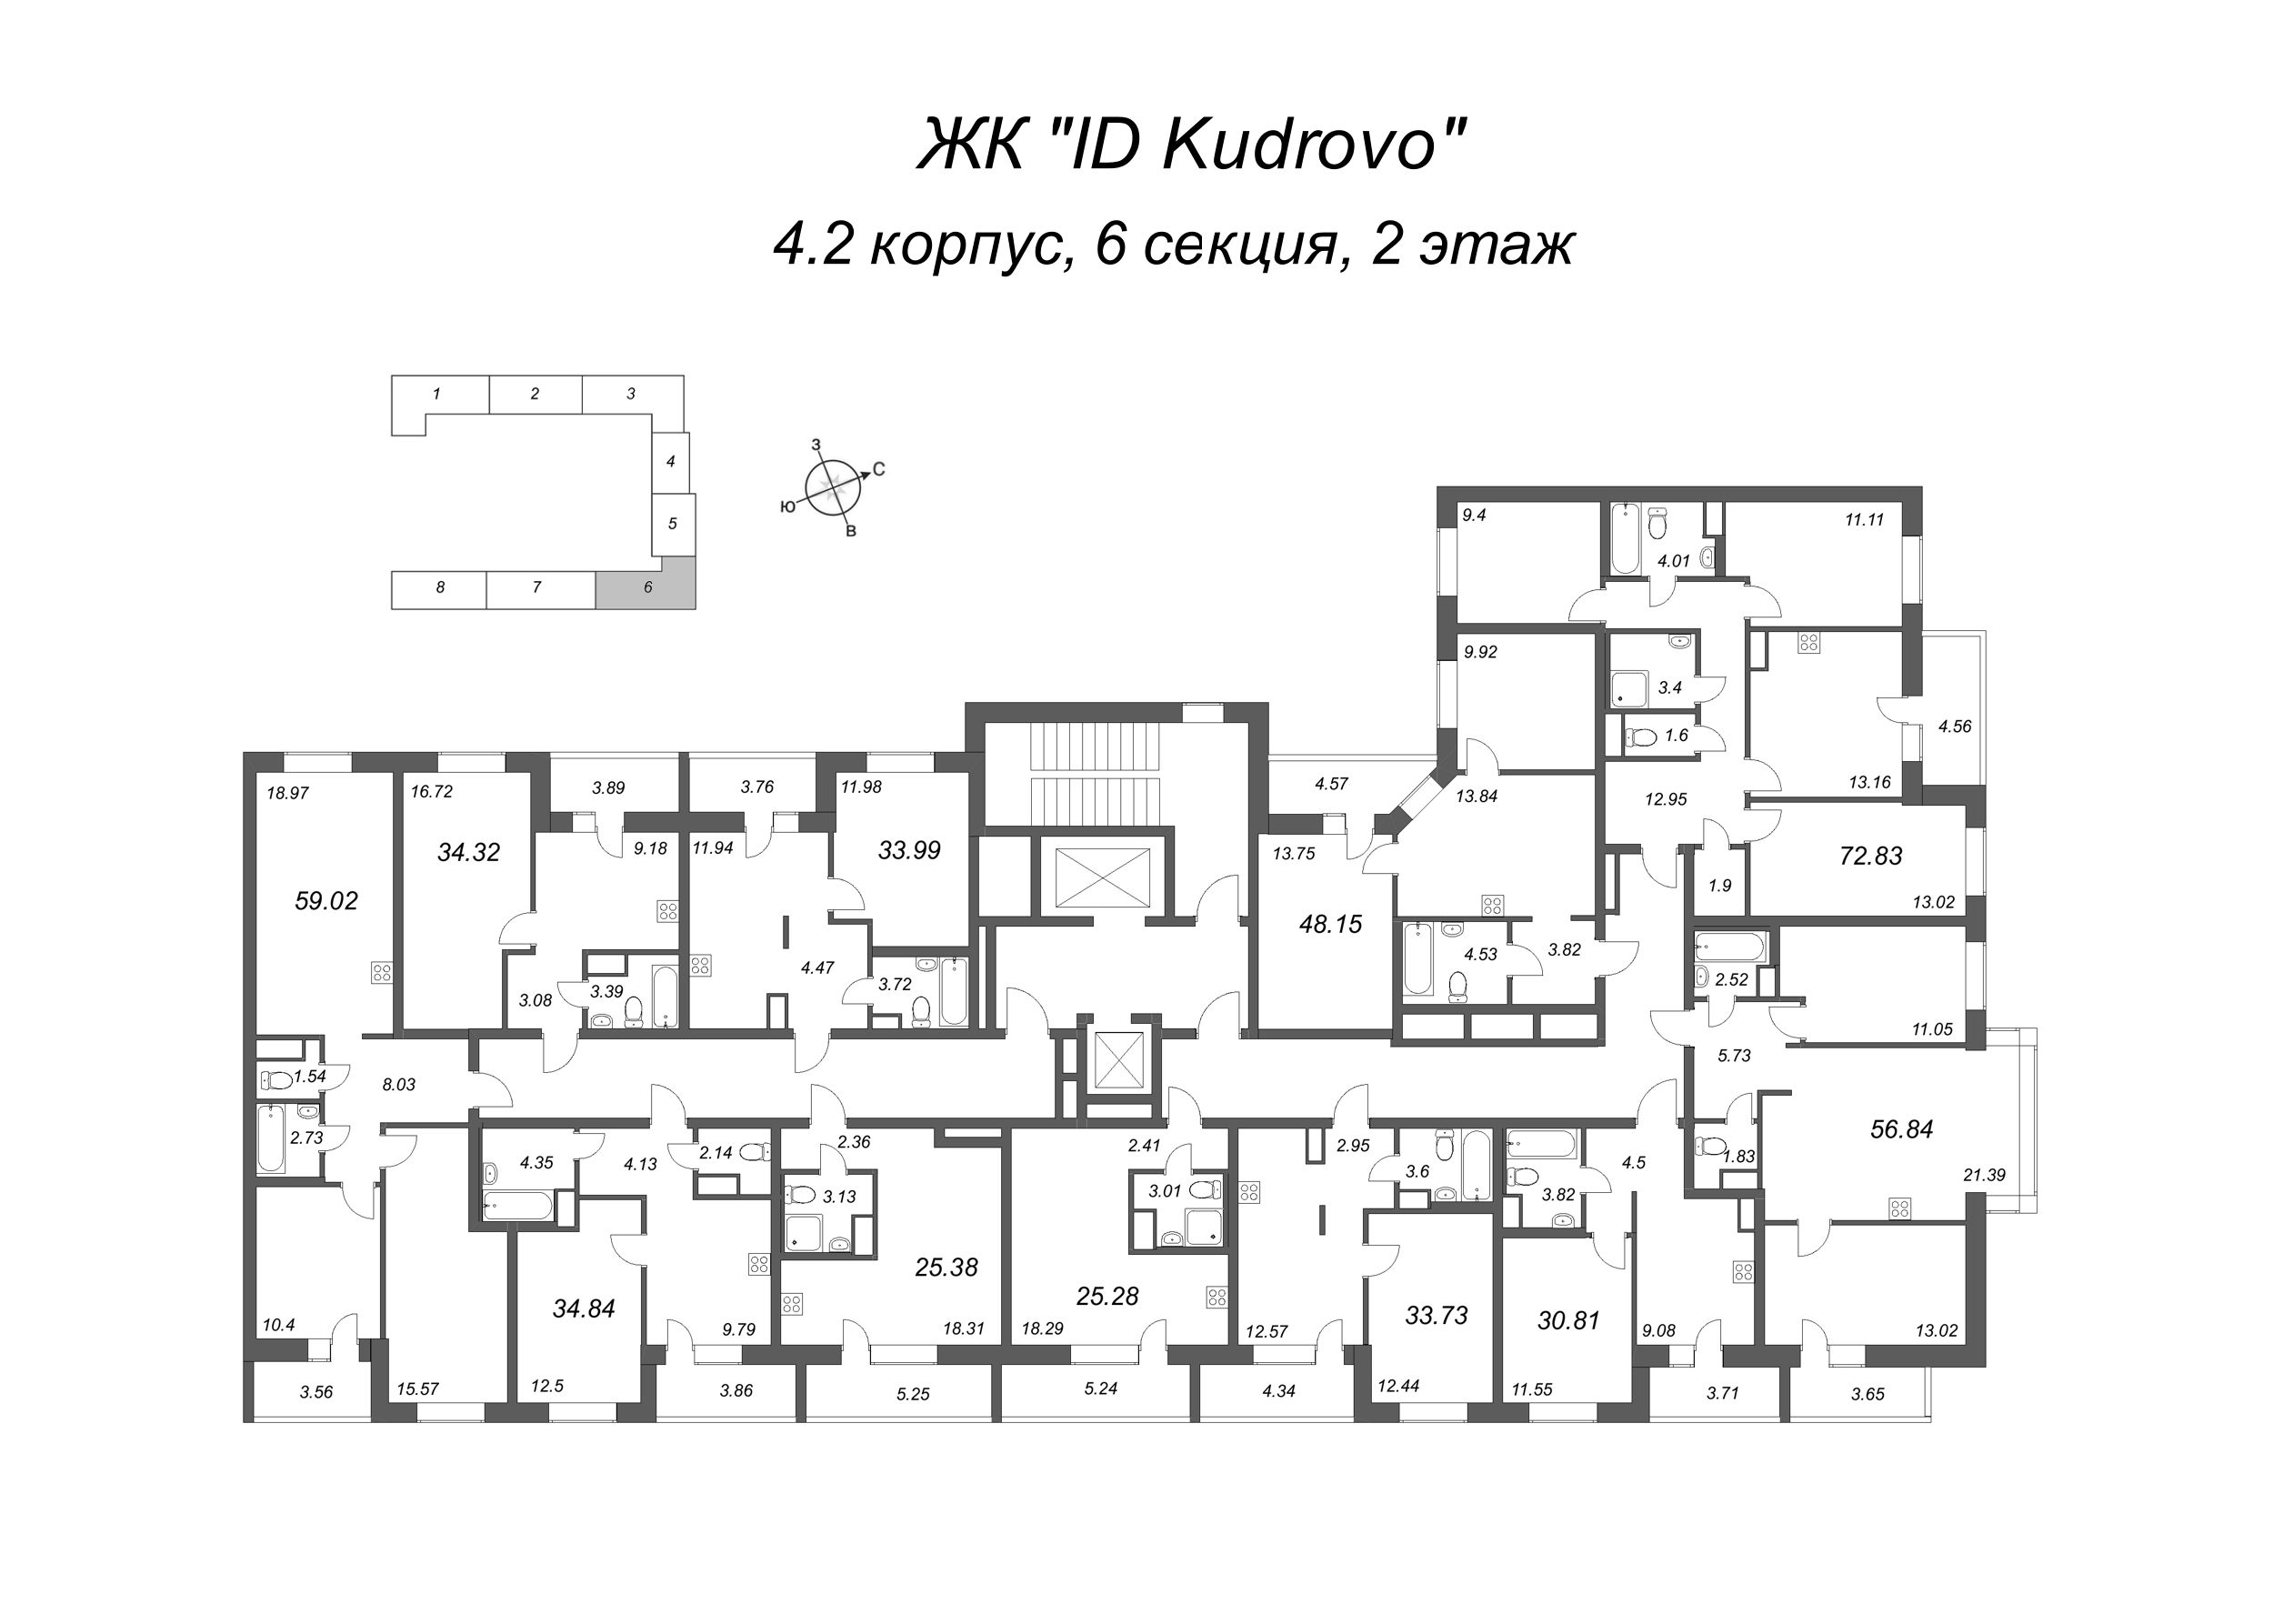 4-комнатная (Евро) квартира, 72.83 м² - планировка этажа